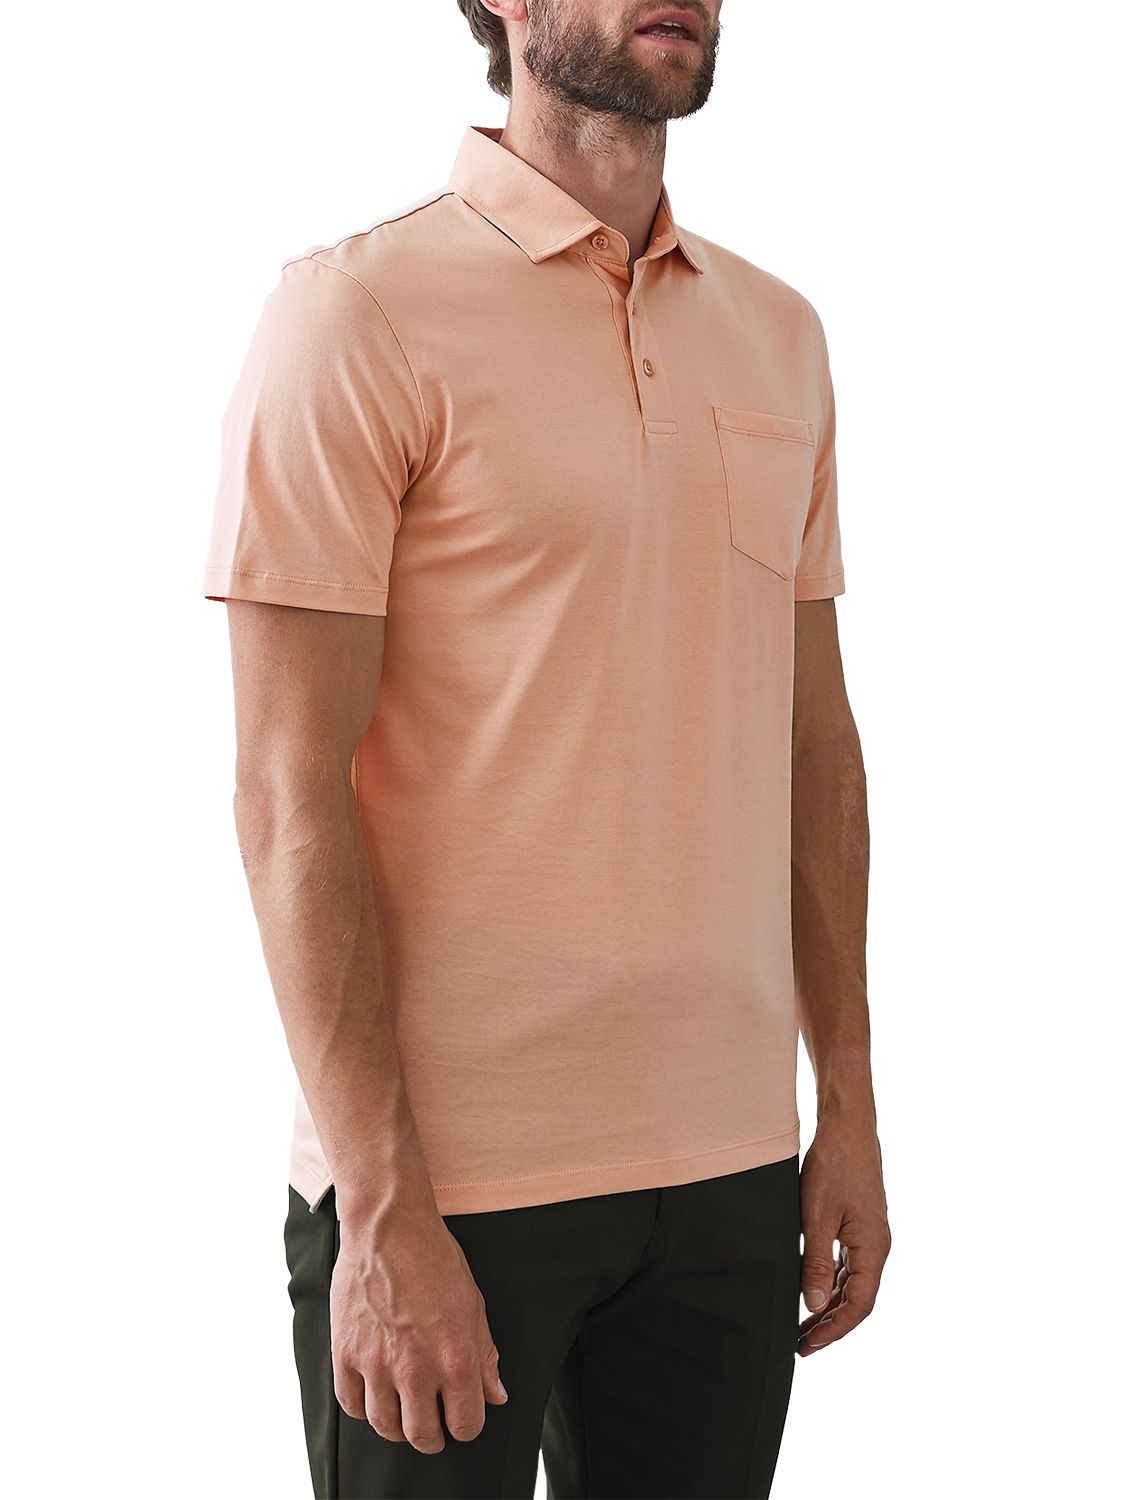 Reiss Elliot Mercerised Cotton Polo Shirt